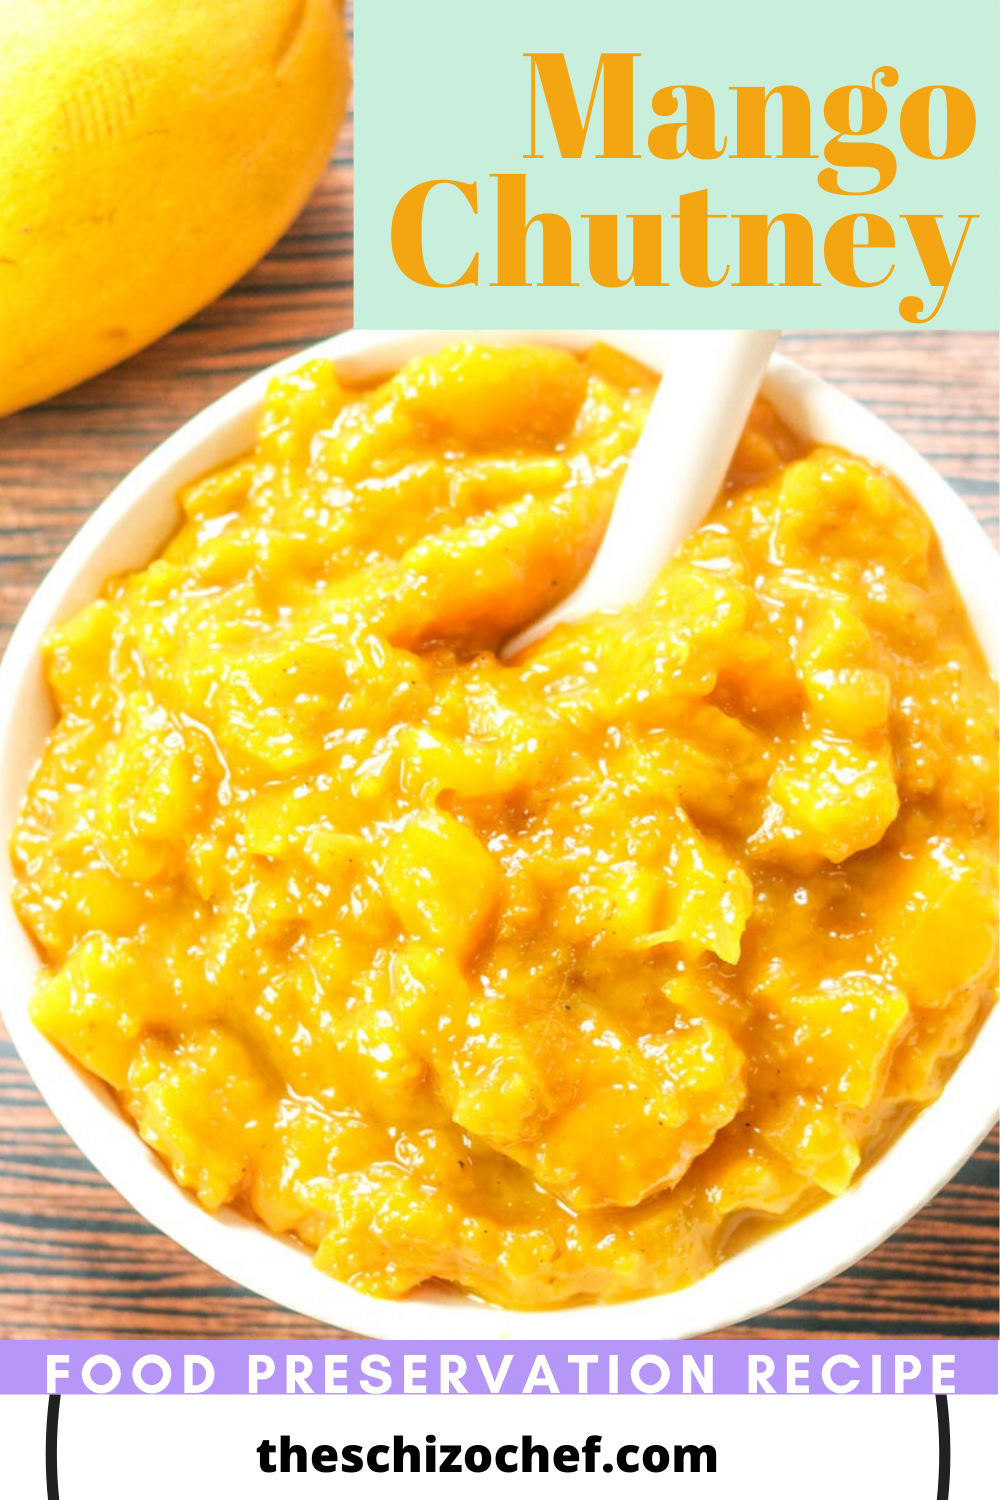 bowl of mango chutney with text